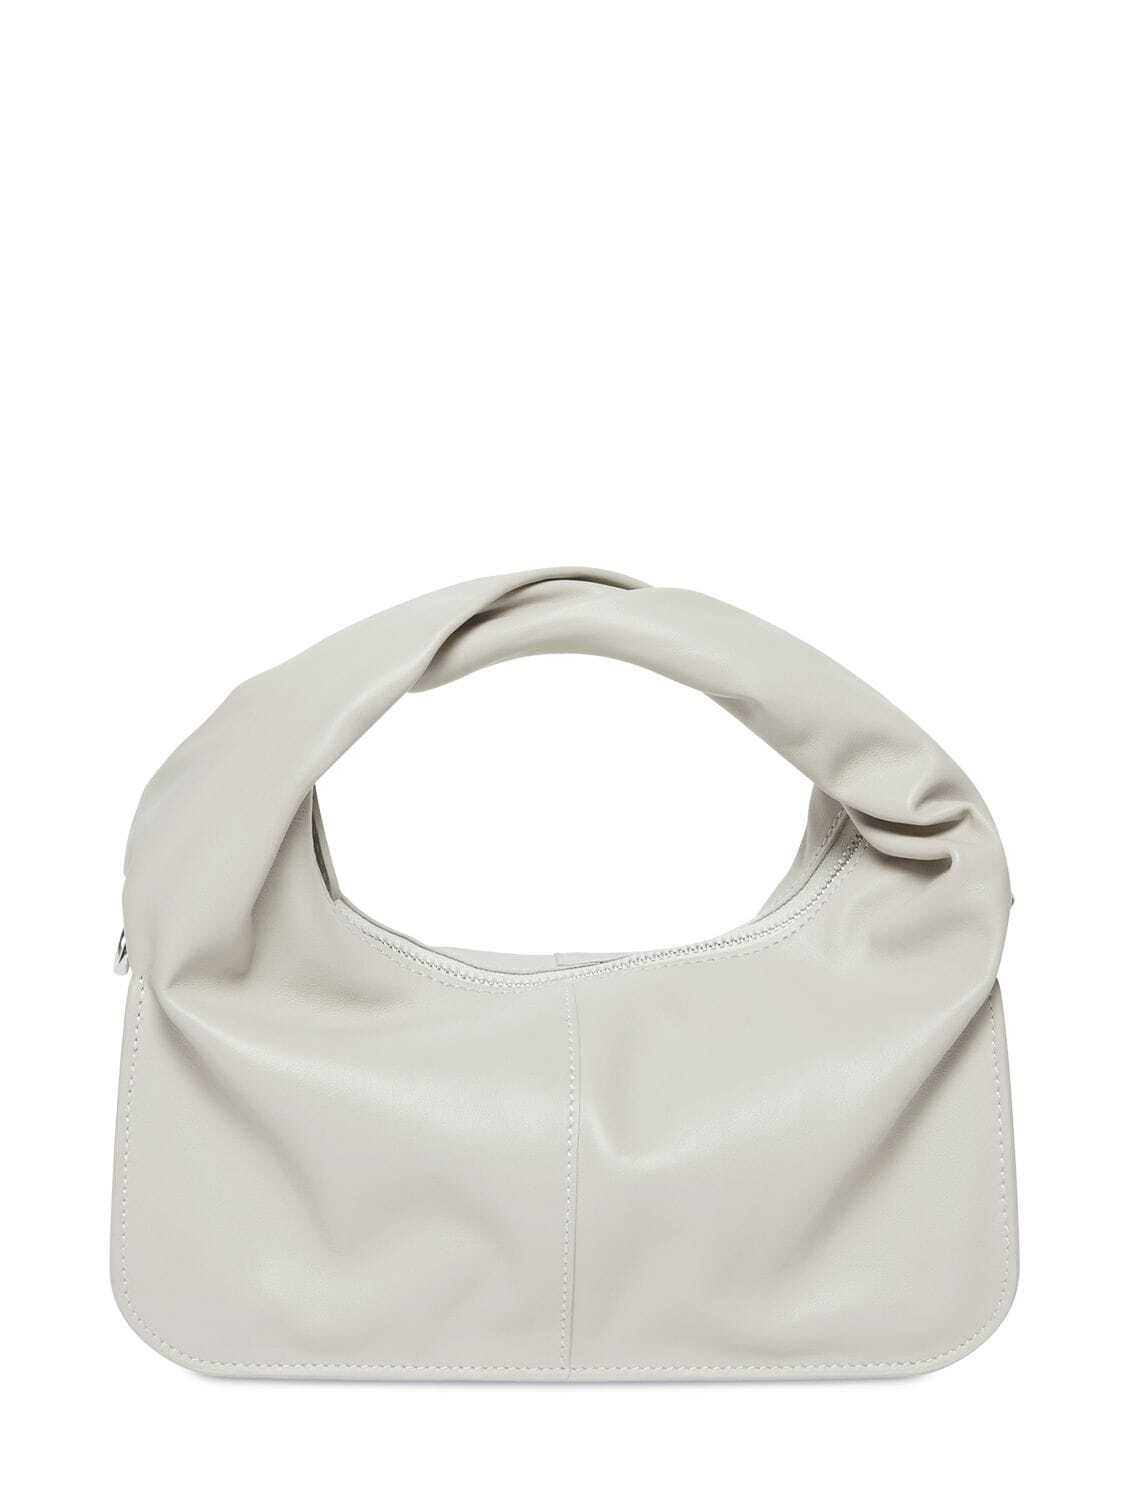 YUZEFI Wonton Leather Top Handle Bag in white